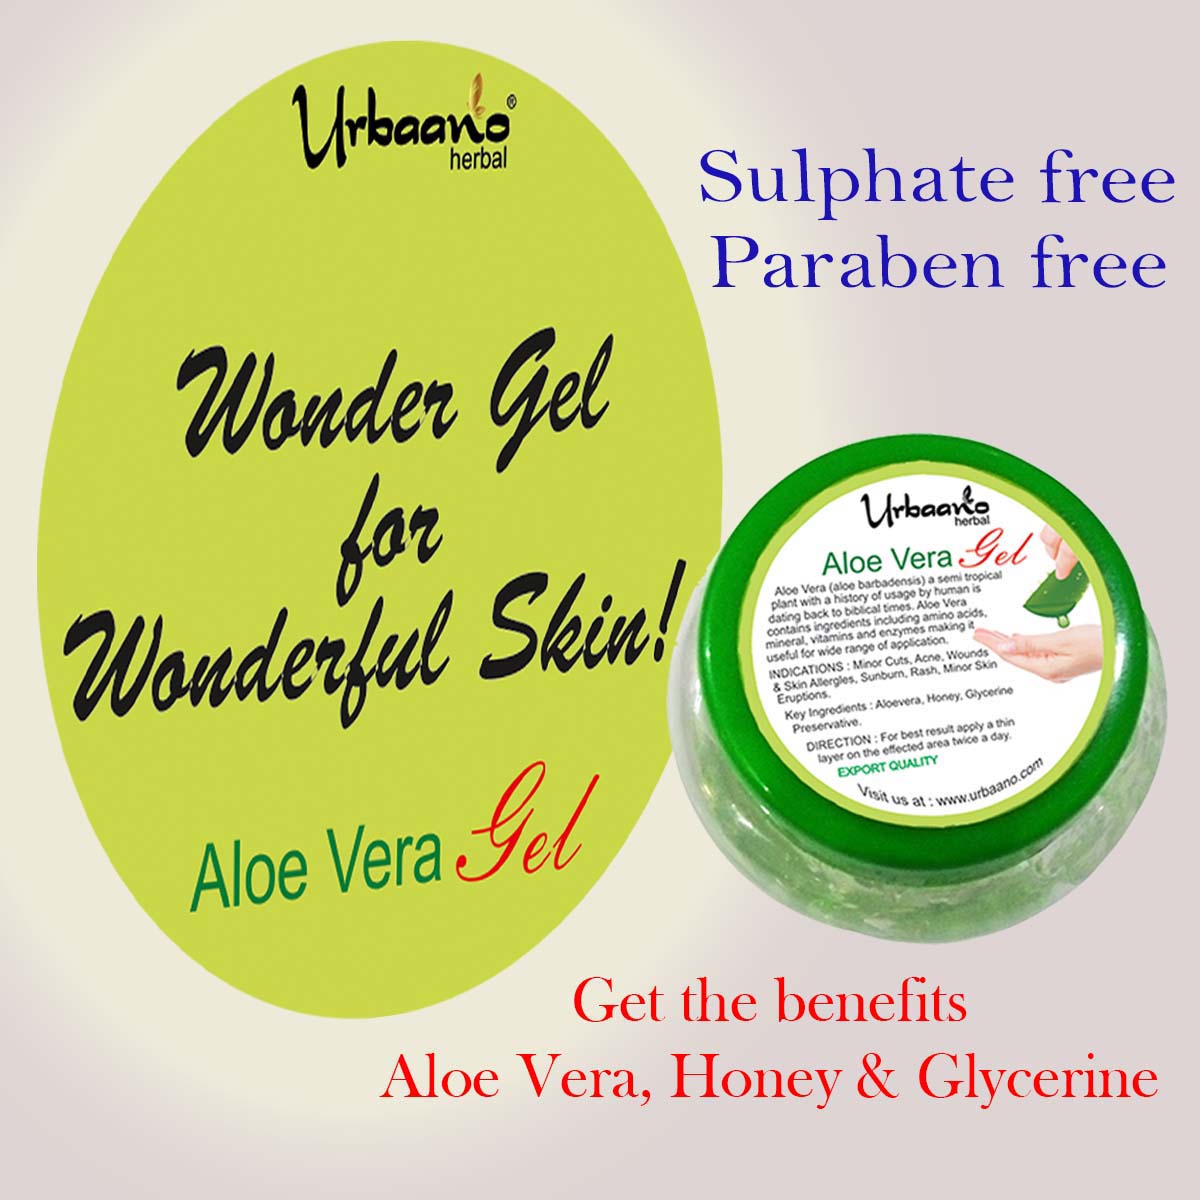 Urbaano Herbal Anti Acne, Blemish Free Pure Aloe Vera Face & Body Gel